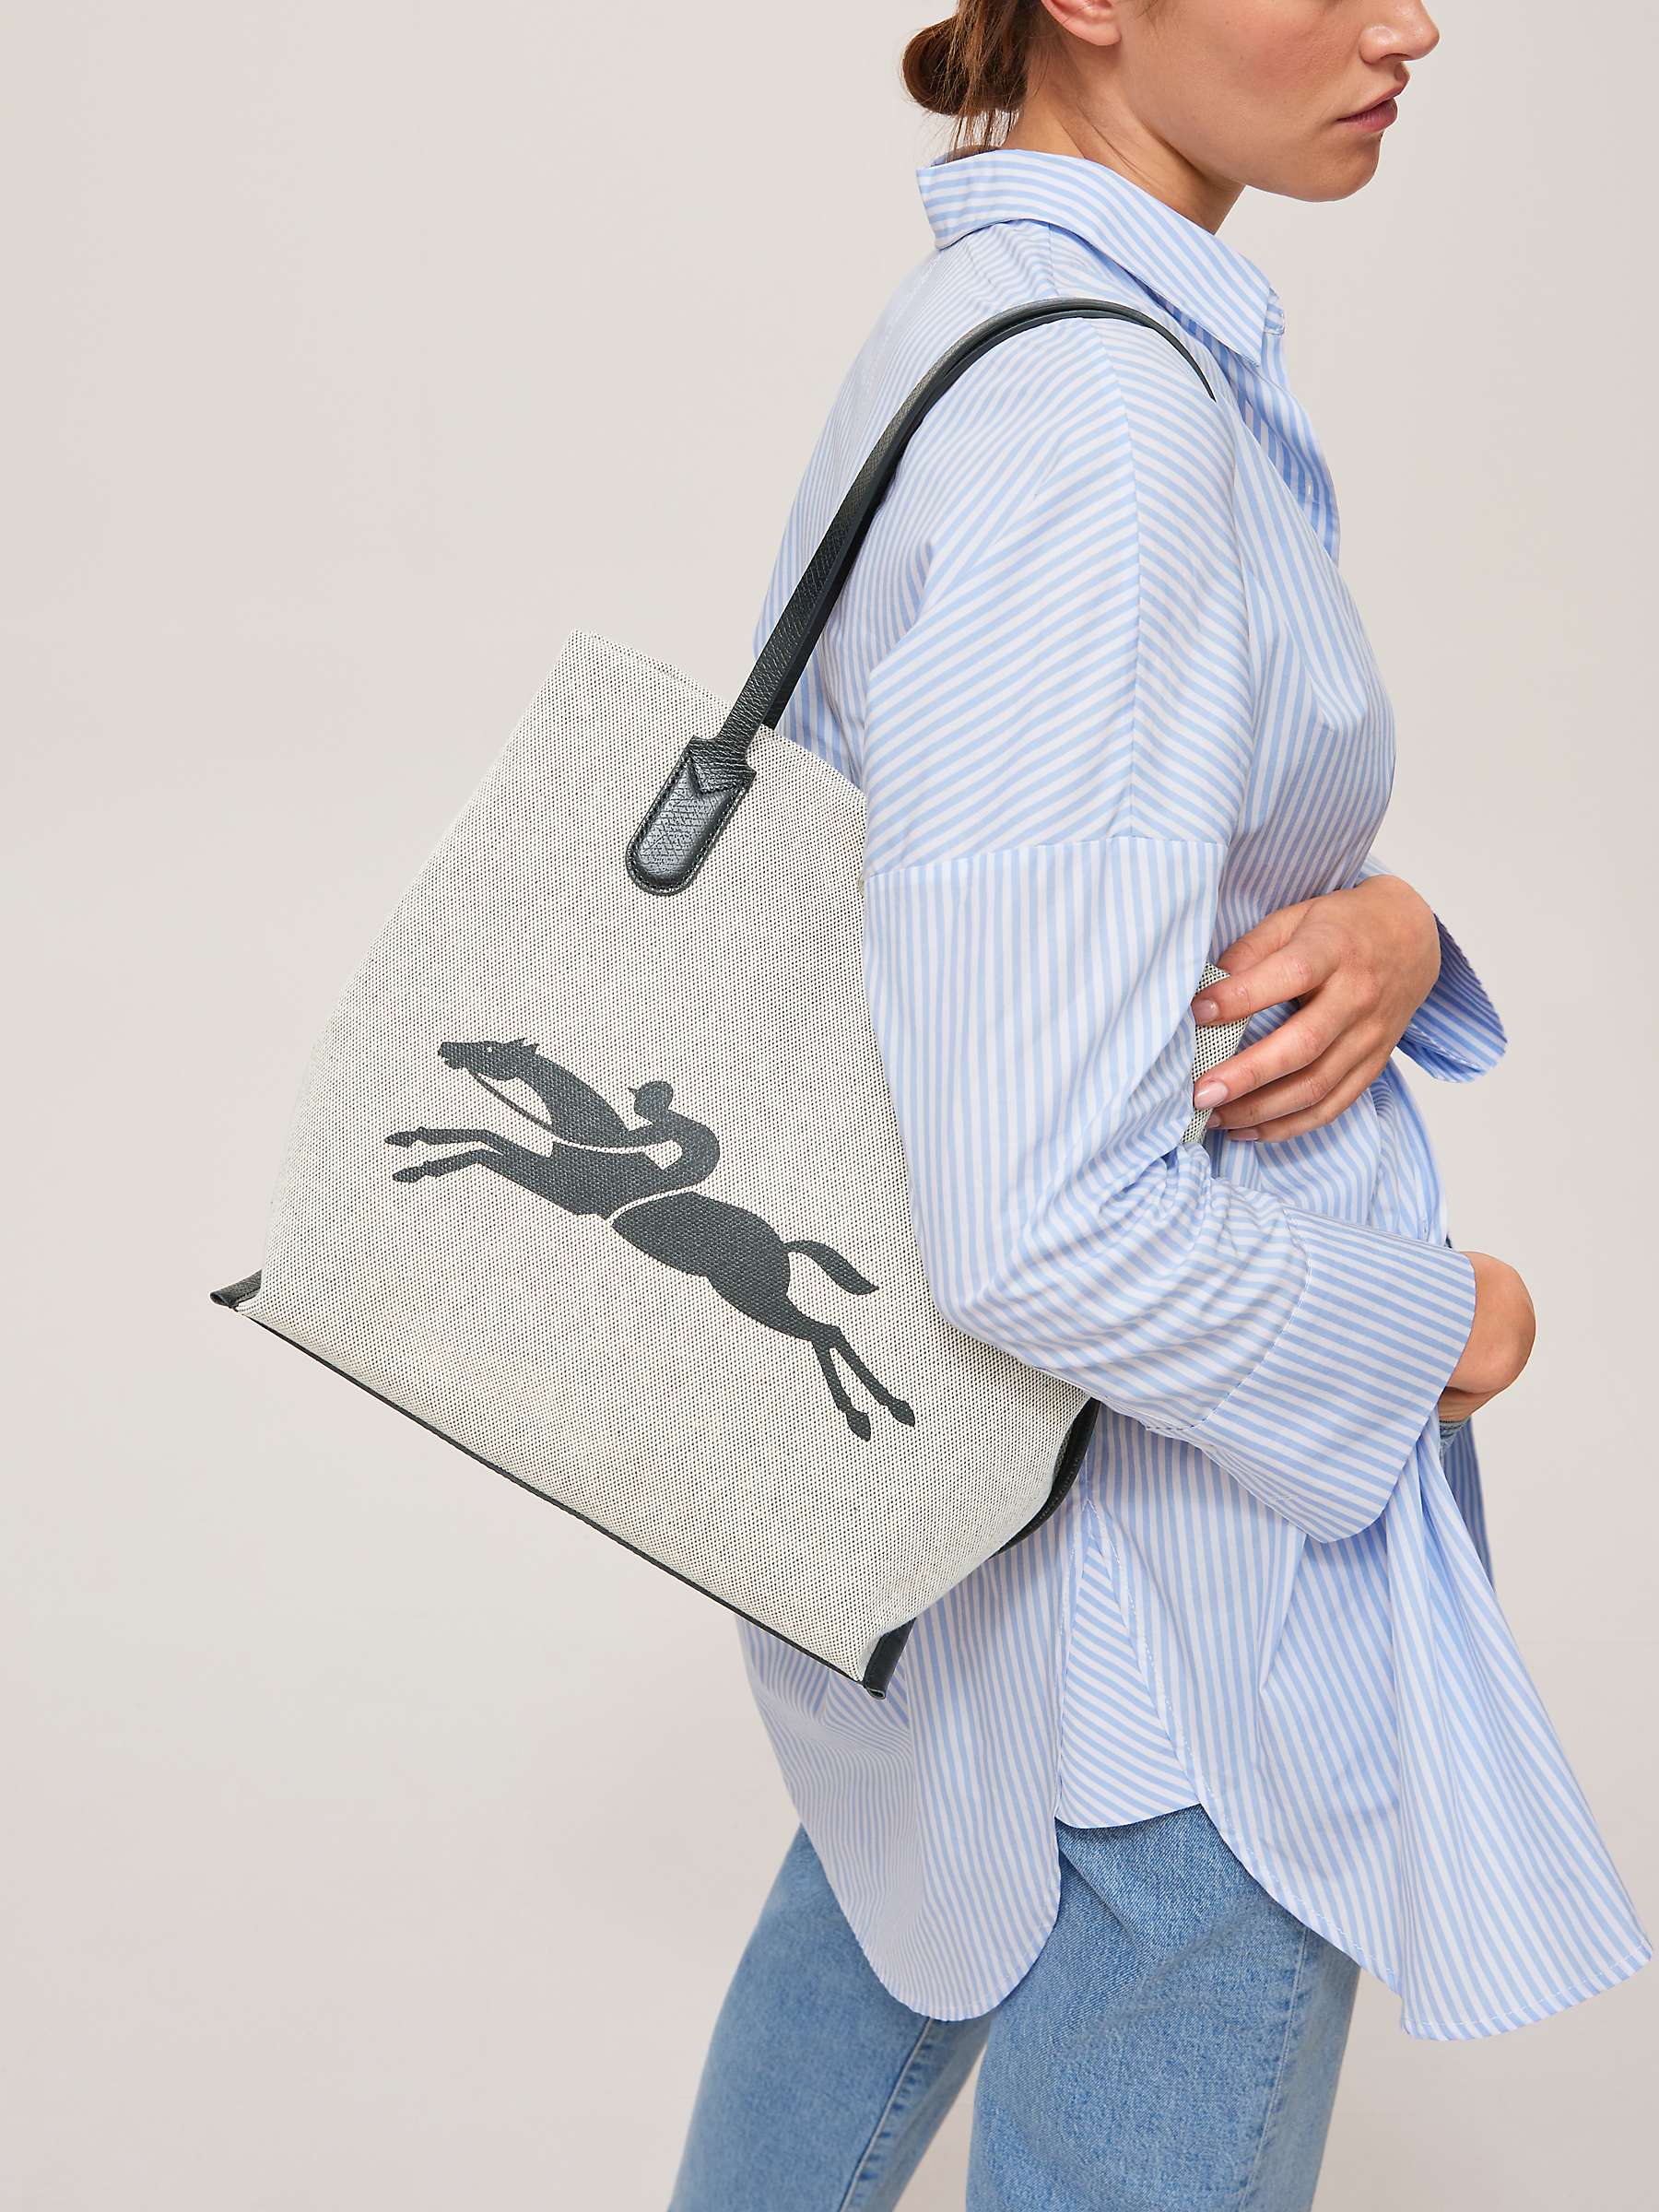 Buy Longchamp Roseau Large Canvas Shopper Bag, Ecru Online at johnlewis.com